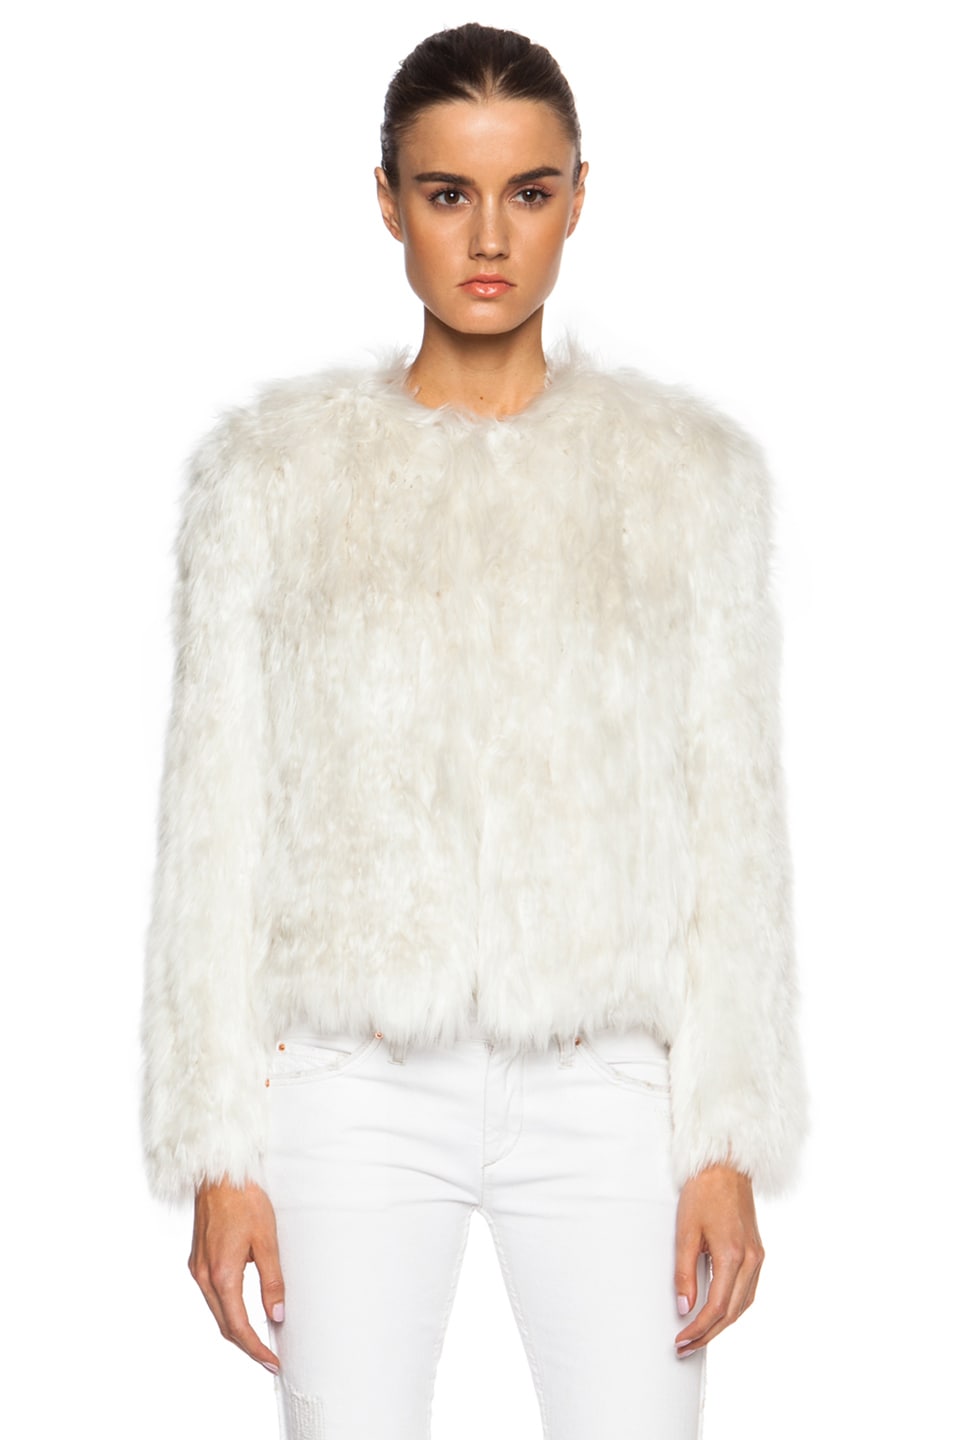 Isabel Marant Aggy Knitted Fur Jacket in Ecru | FWRD